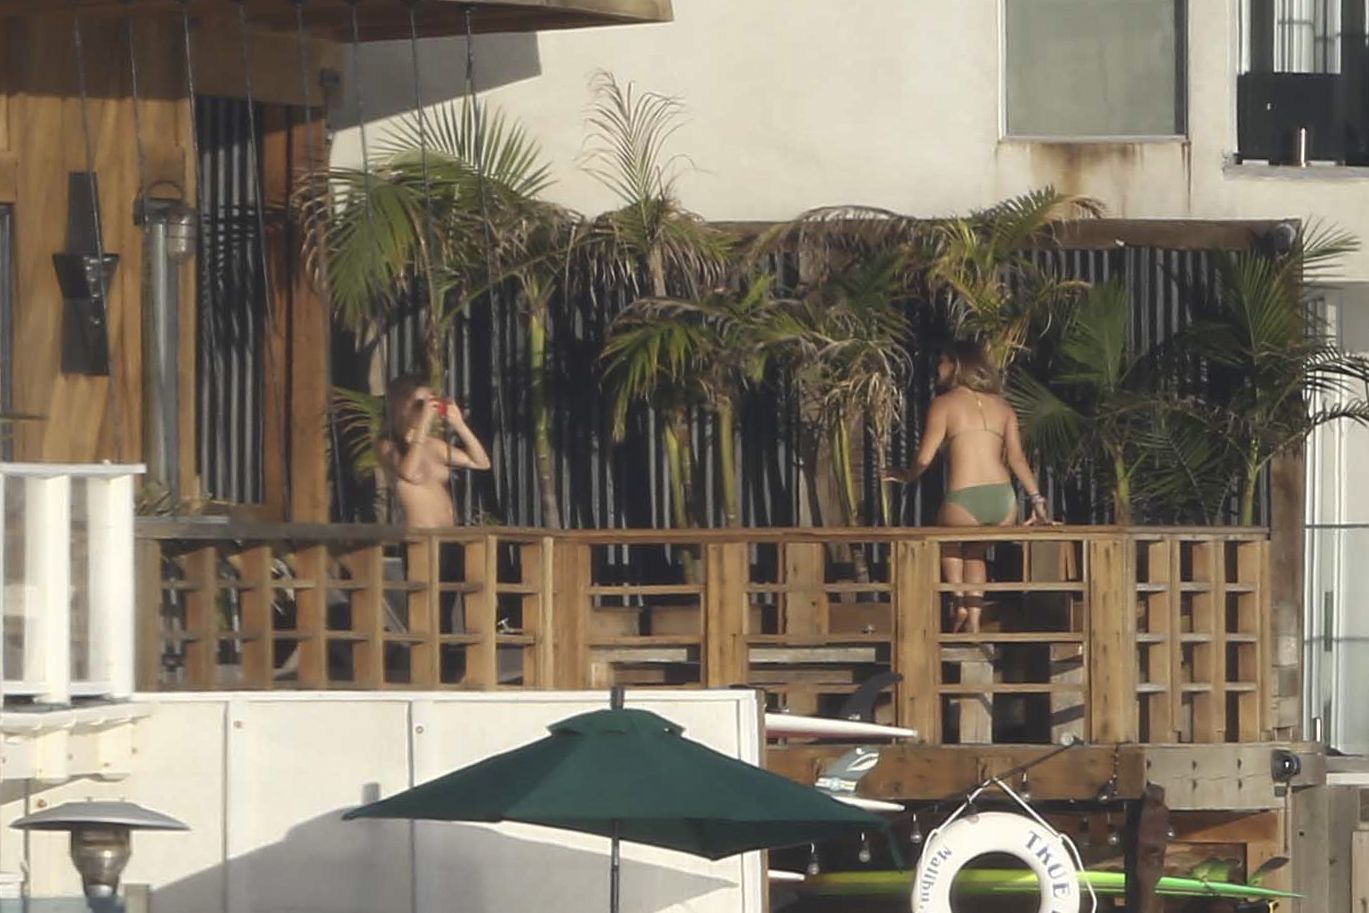 Cara_Delevingne_topless_on_a_balcony_in_Malibu_48x_HQ_5.jpg